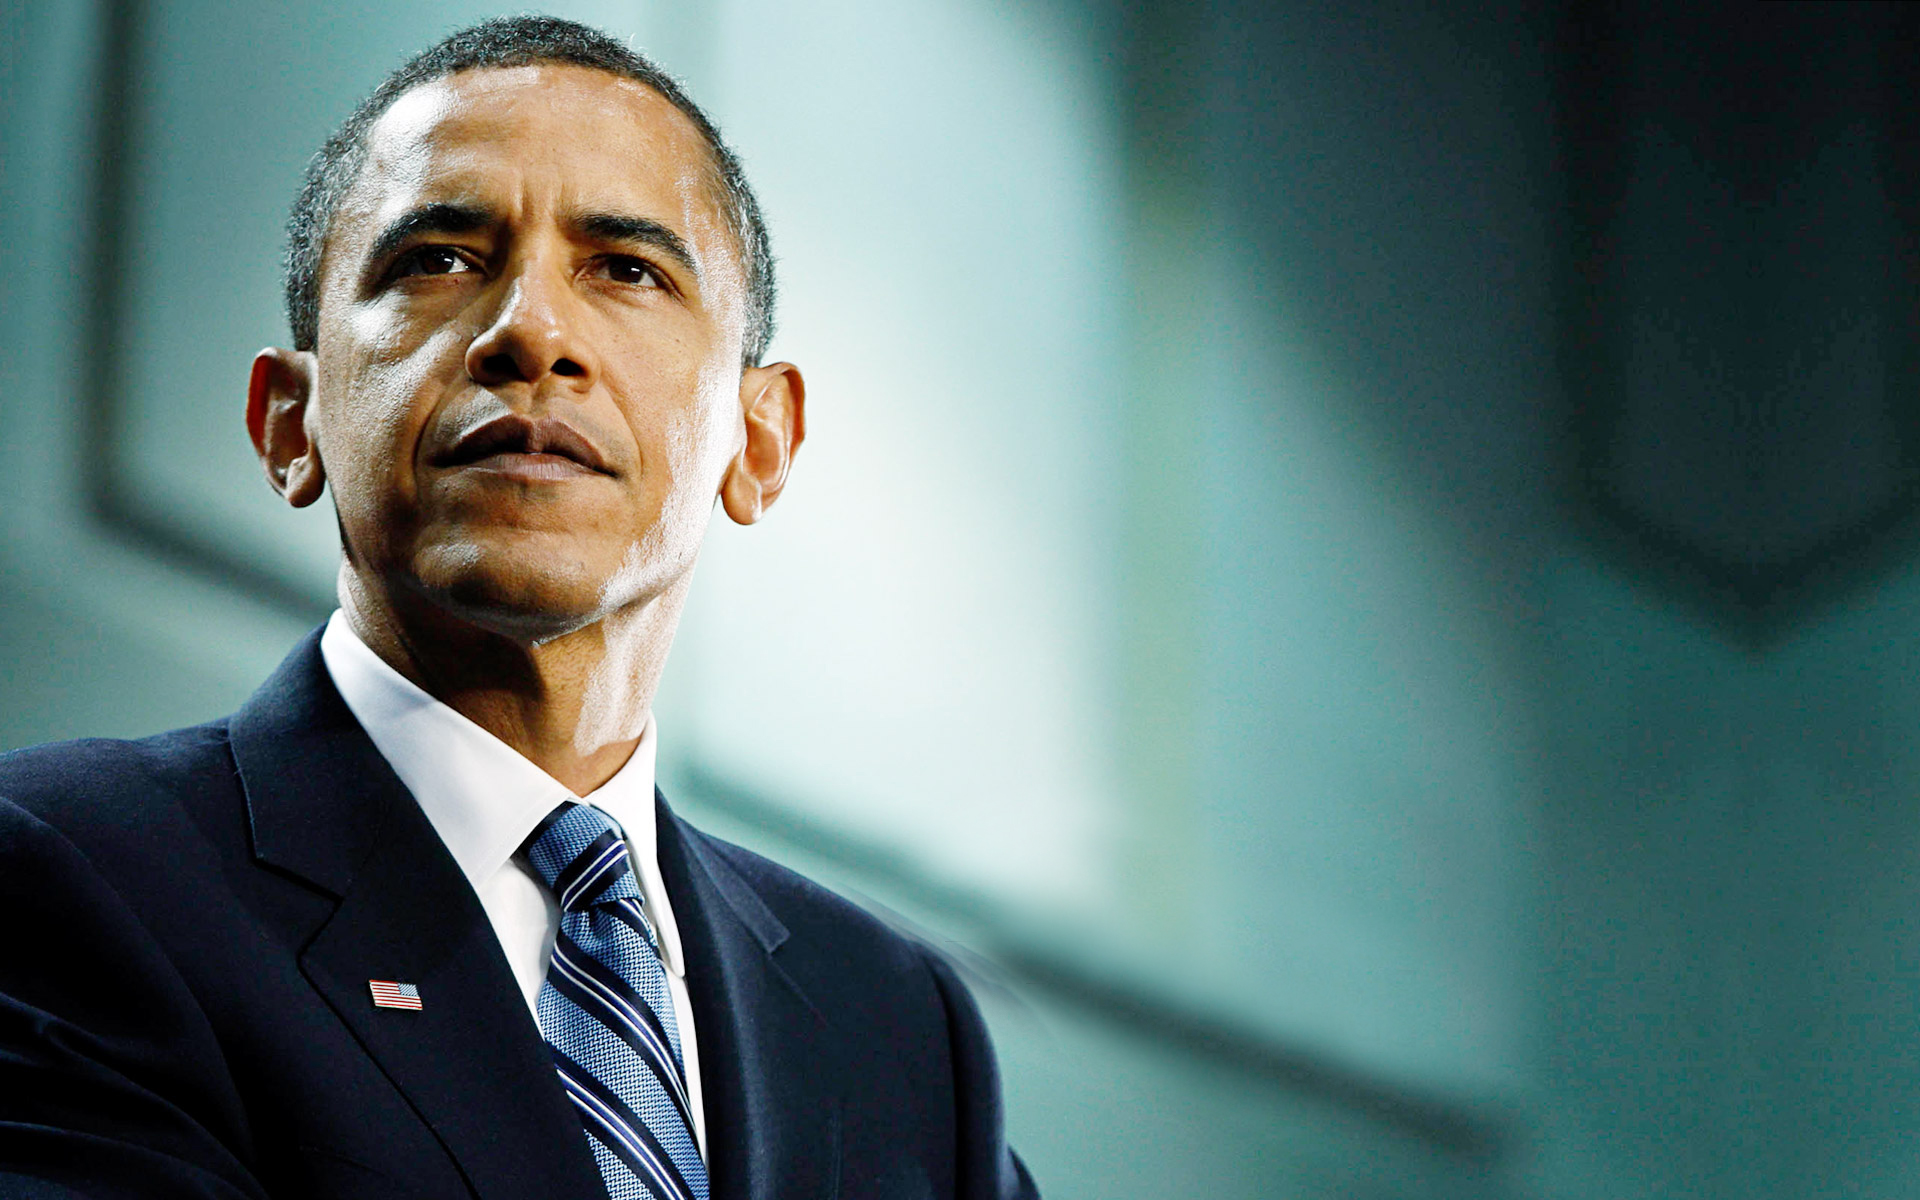 President Obama to speak at SXSW